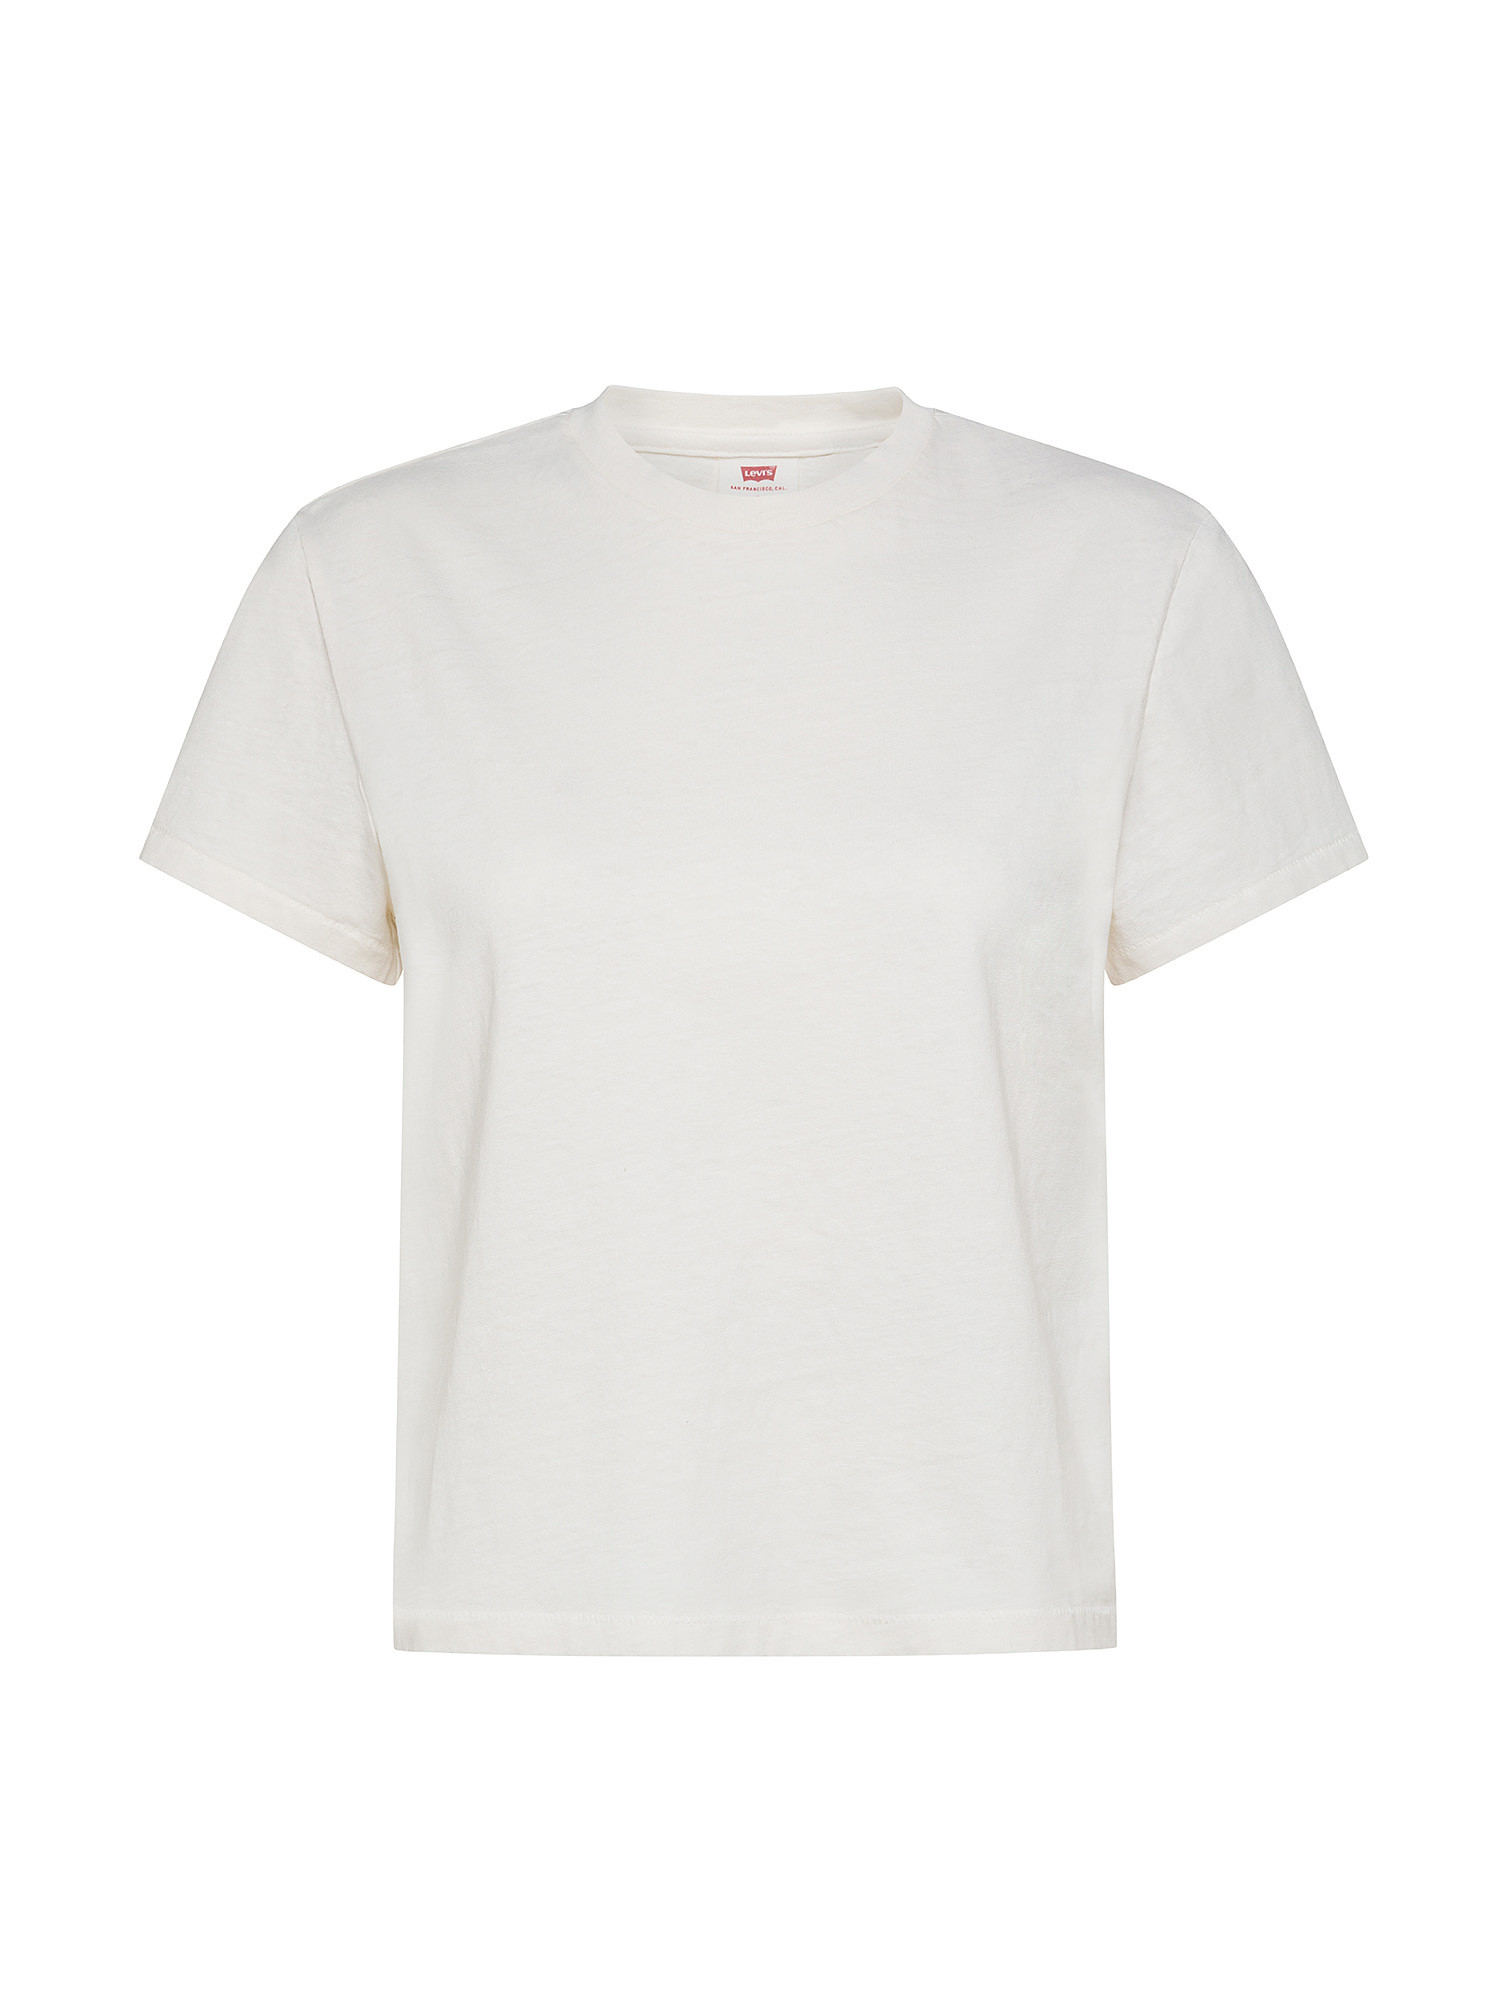 Levi's - T-shirt classic fit, Bianco, large image number 0